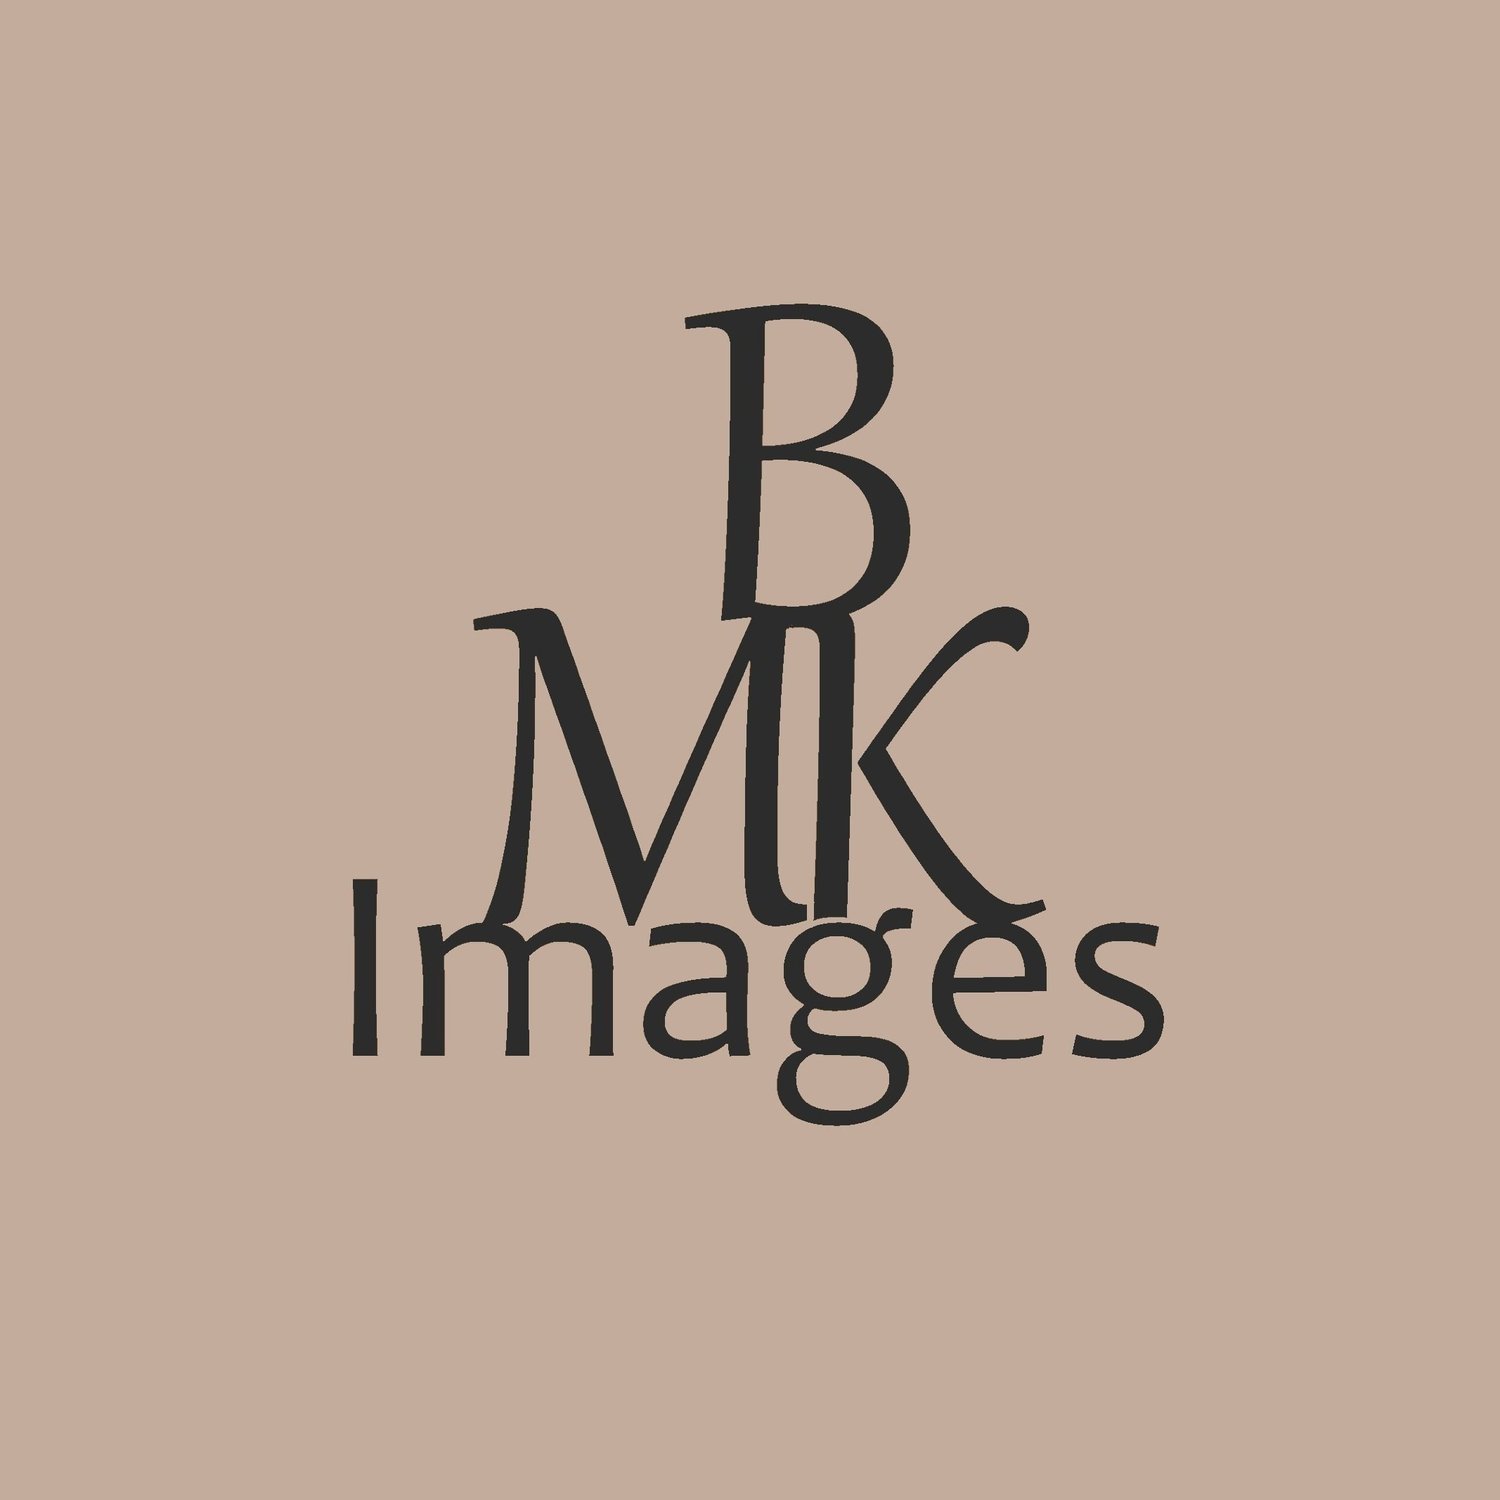 BMK Images